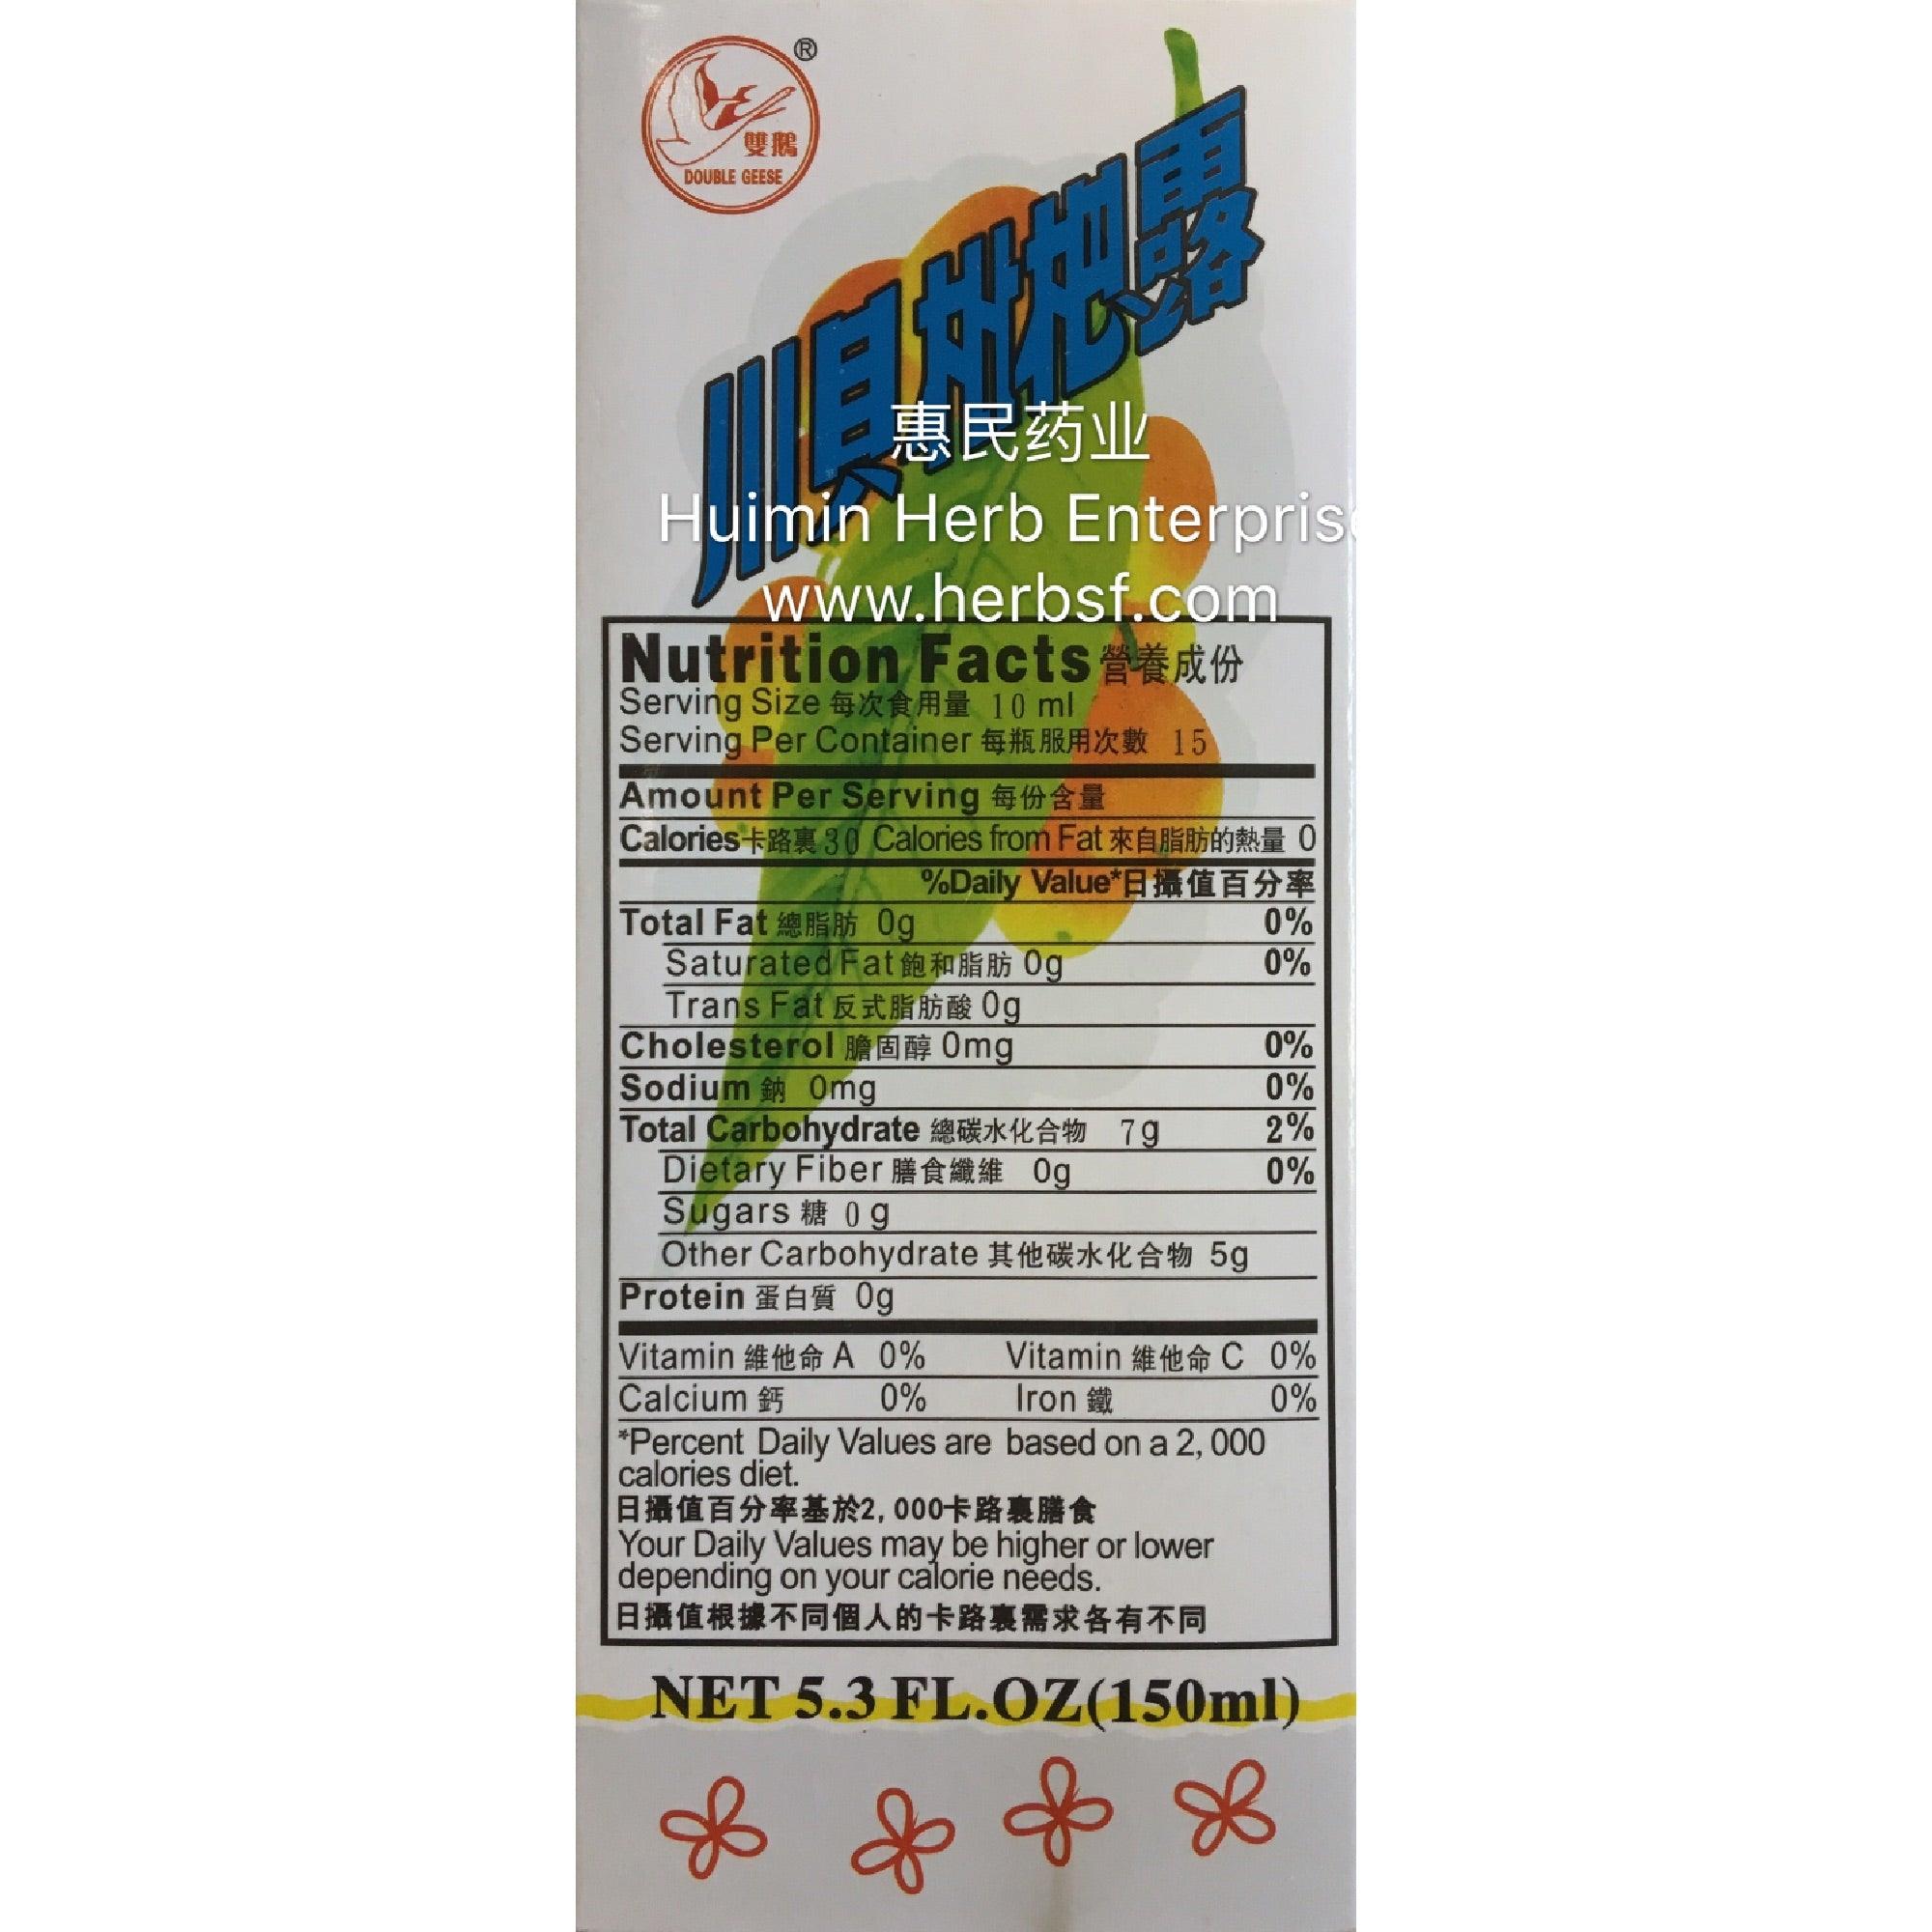 Fritillary & Loquat Extract - Huimin Herb Online, LLC